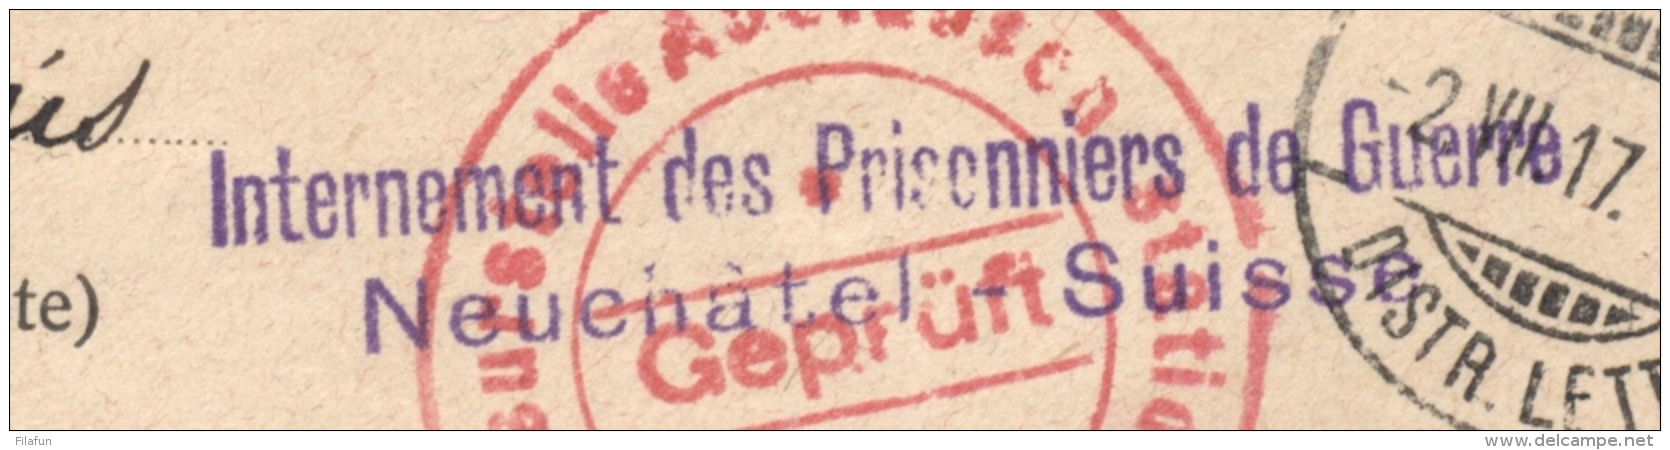 Schweiz - 1917 - Konstanz Censored POW-cover From Interné Belge Neuchatel To Anvers / België - Documenten